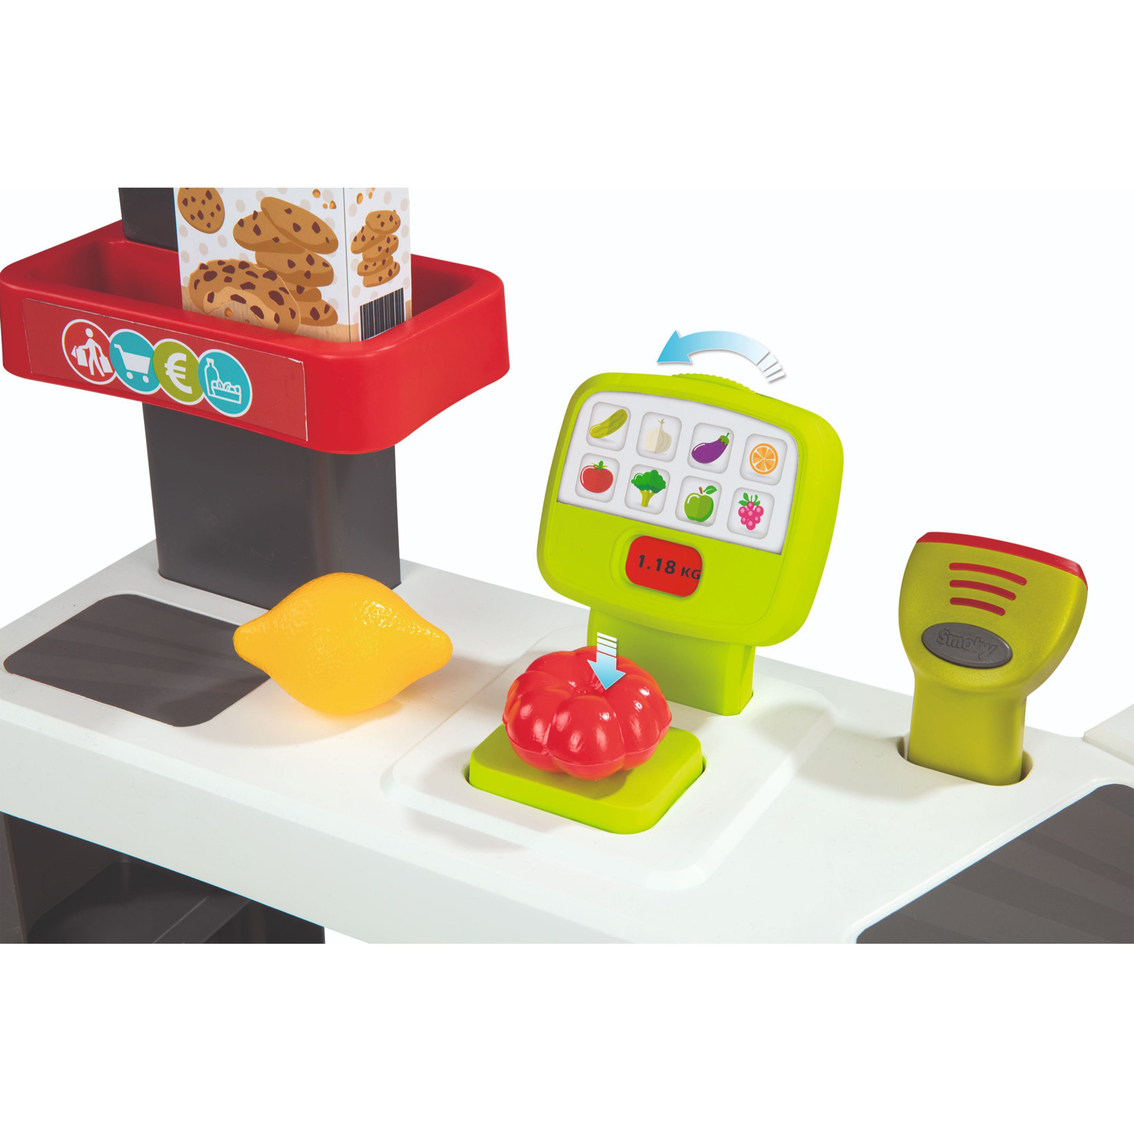 Smoby Toys Super Market Set - Image 6 of 6